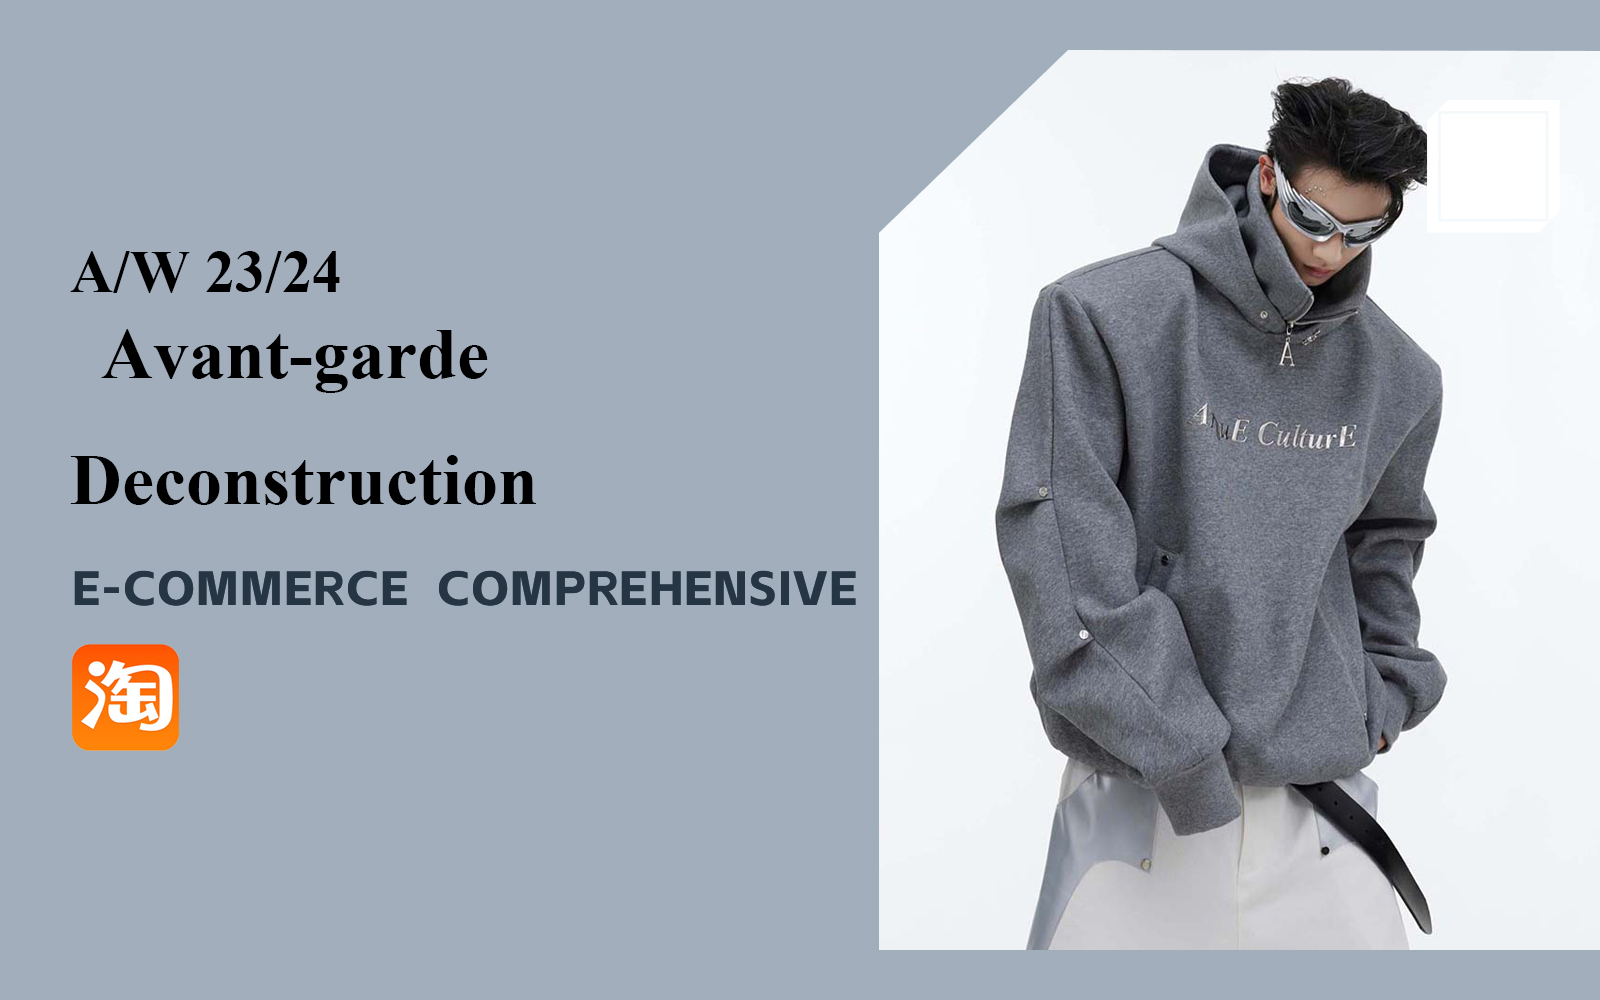 Avant-garde Deconstruction -- The Comprehensive Analysis of E-commerce Menswear Brand